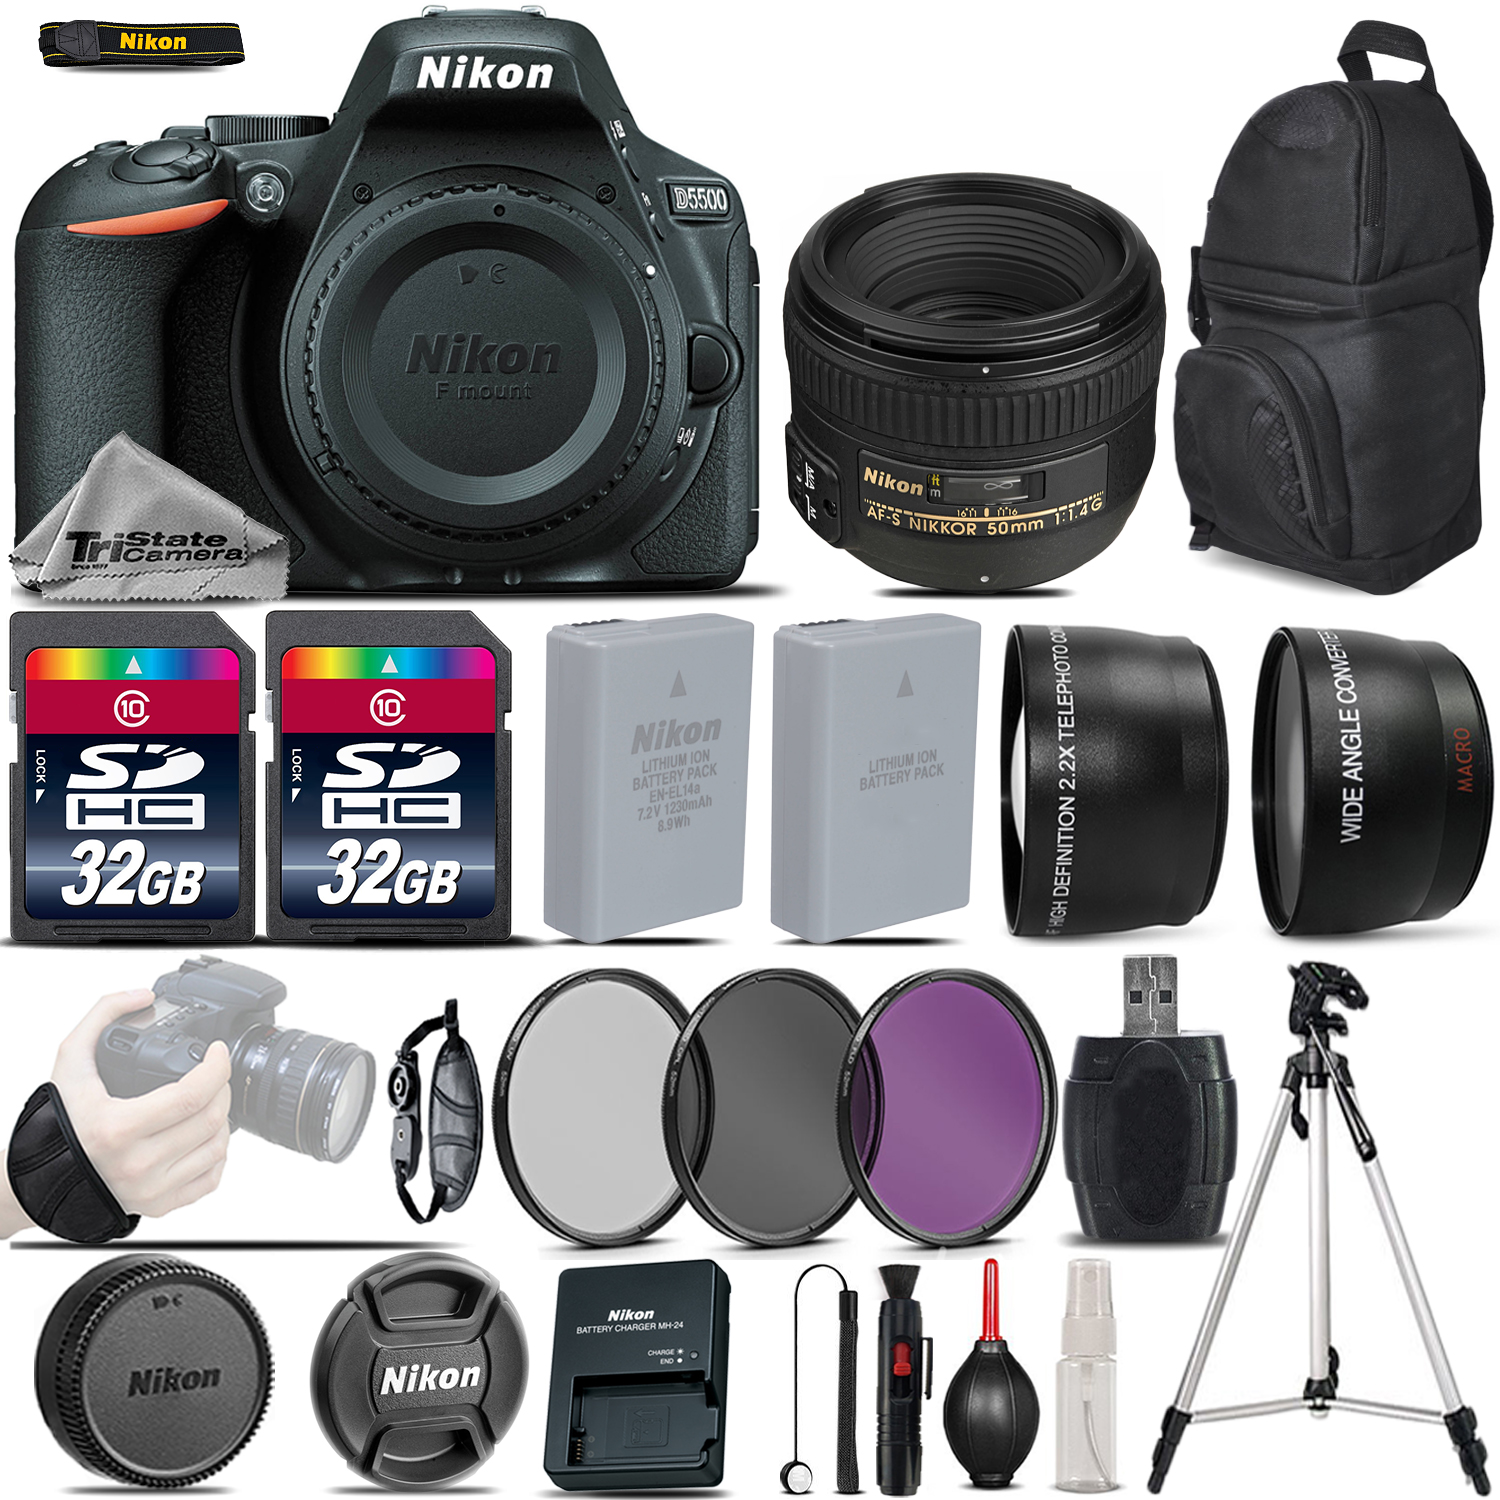 D5500 Digital SLR Camera + 50mm 1.4G Lens + 64GB -Great Saving Full Kit *FREE SHIPPING*